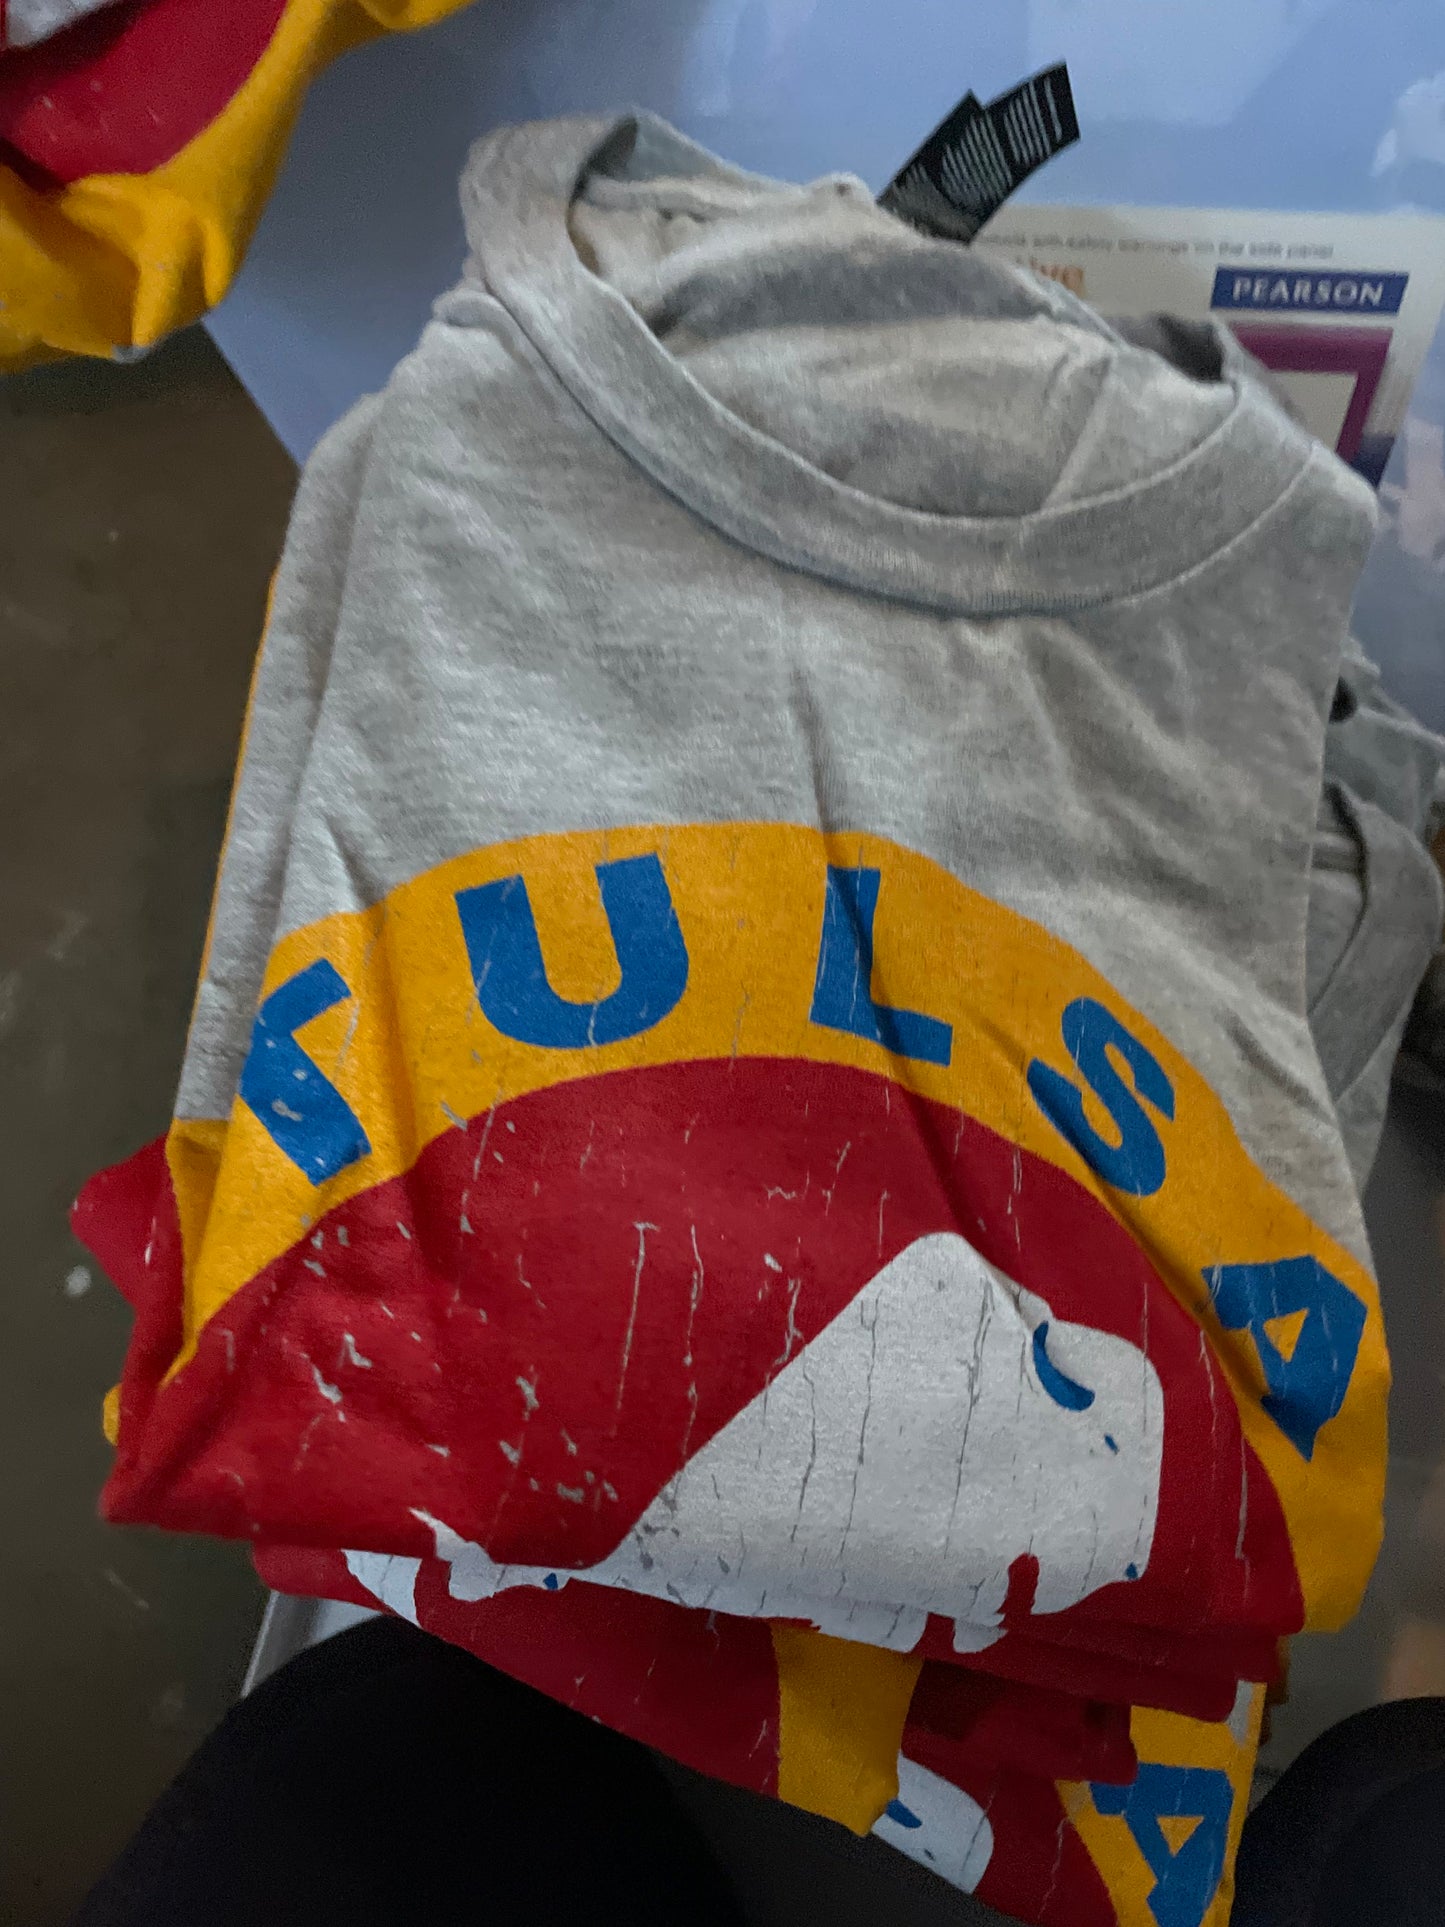 Tulsa Buffalo